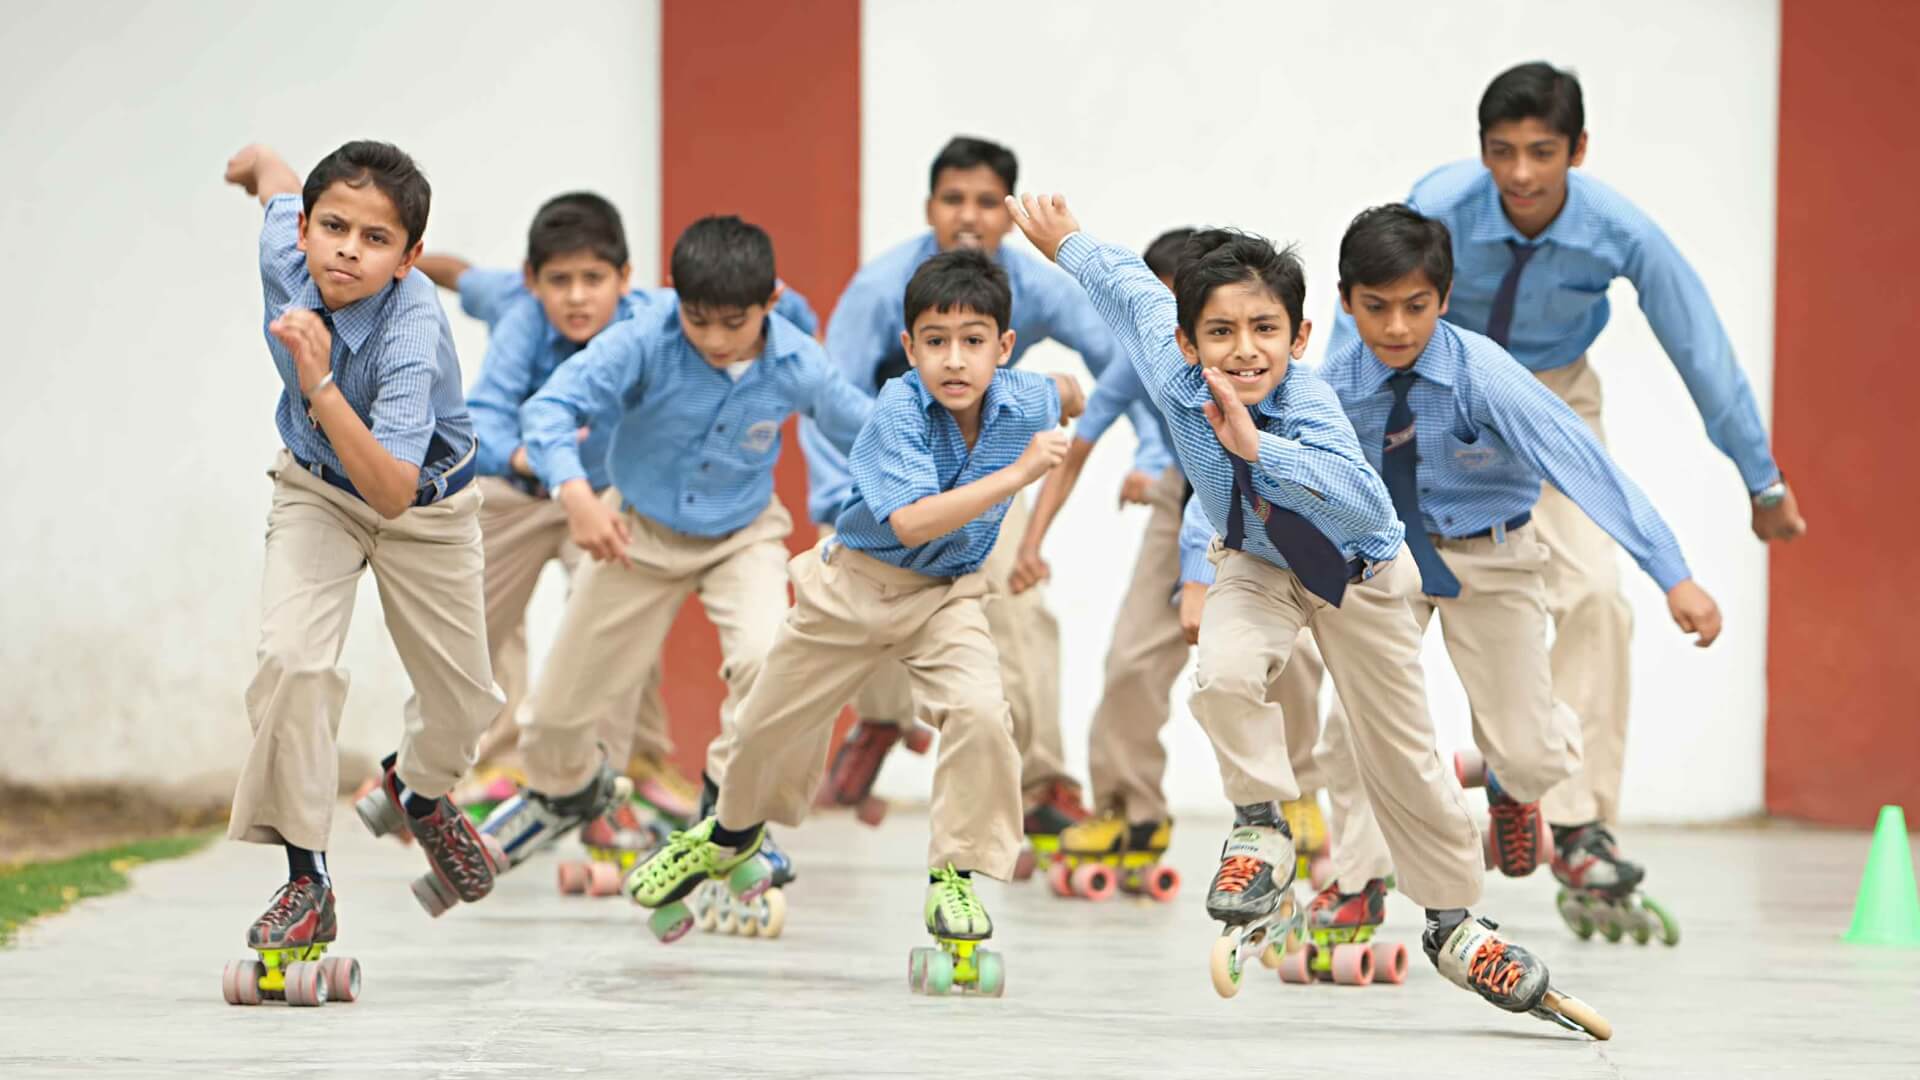 Skating Competition at Richmondd Global School New Delhi